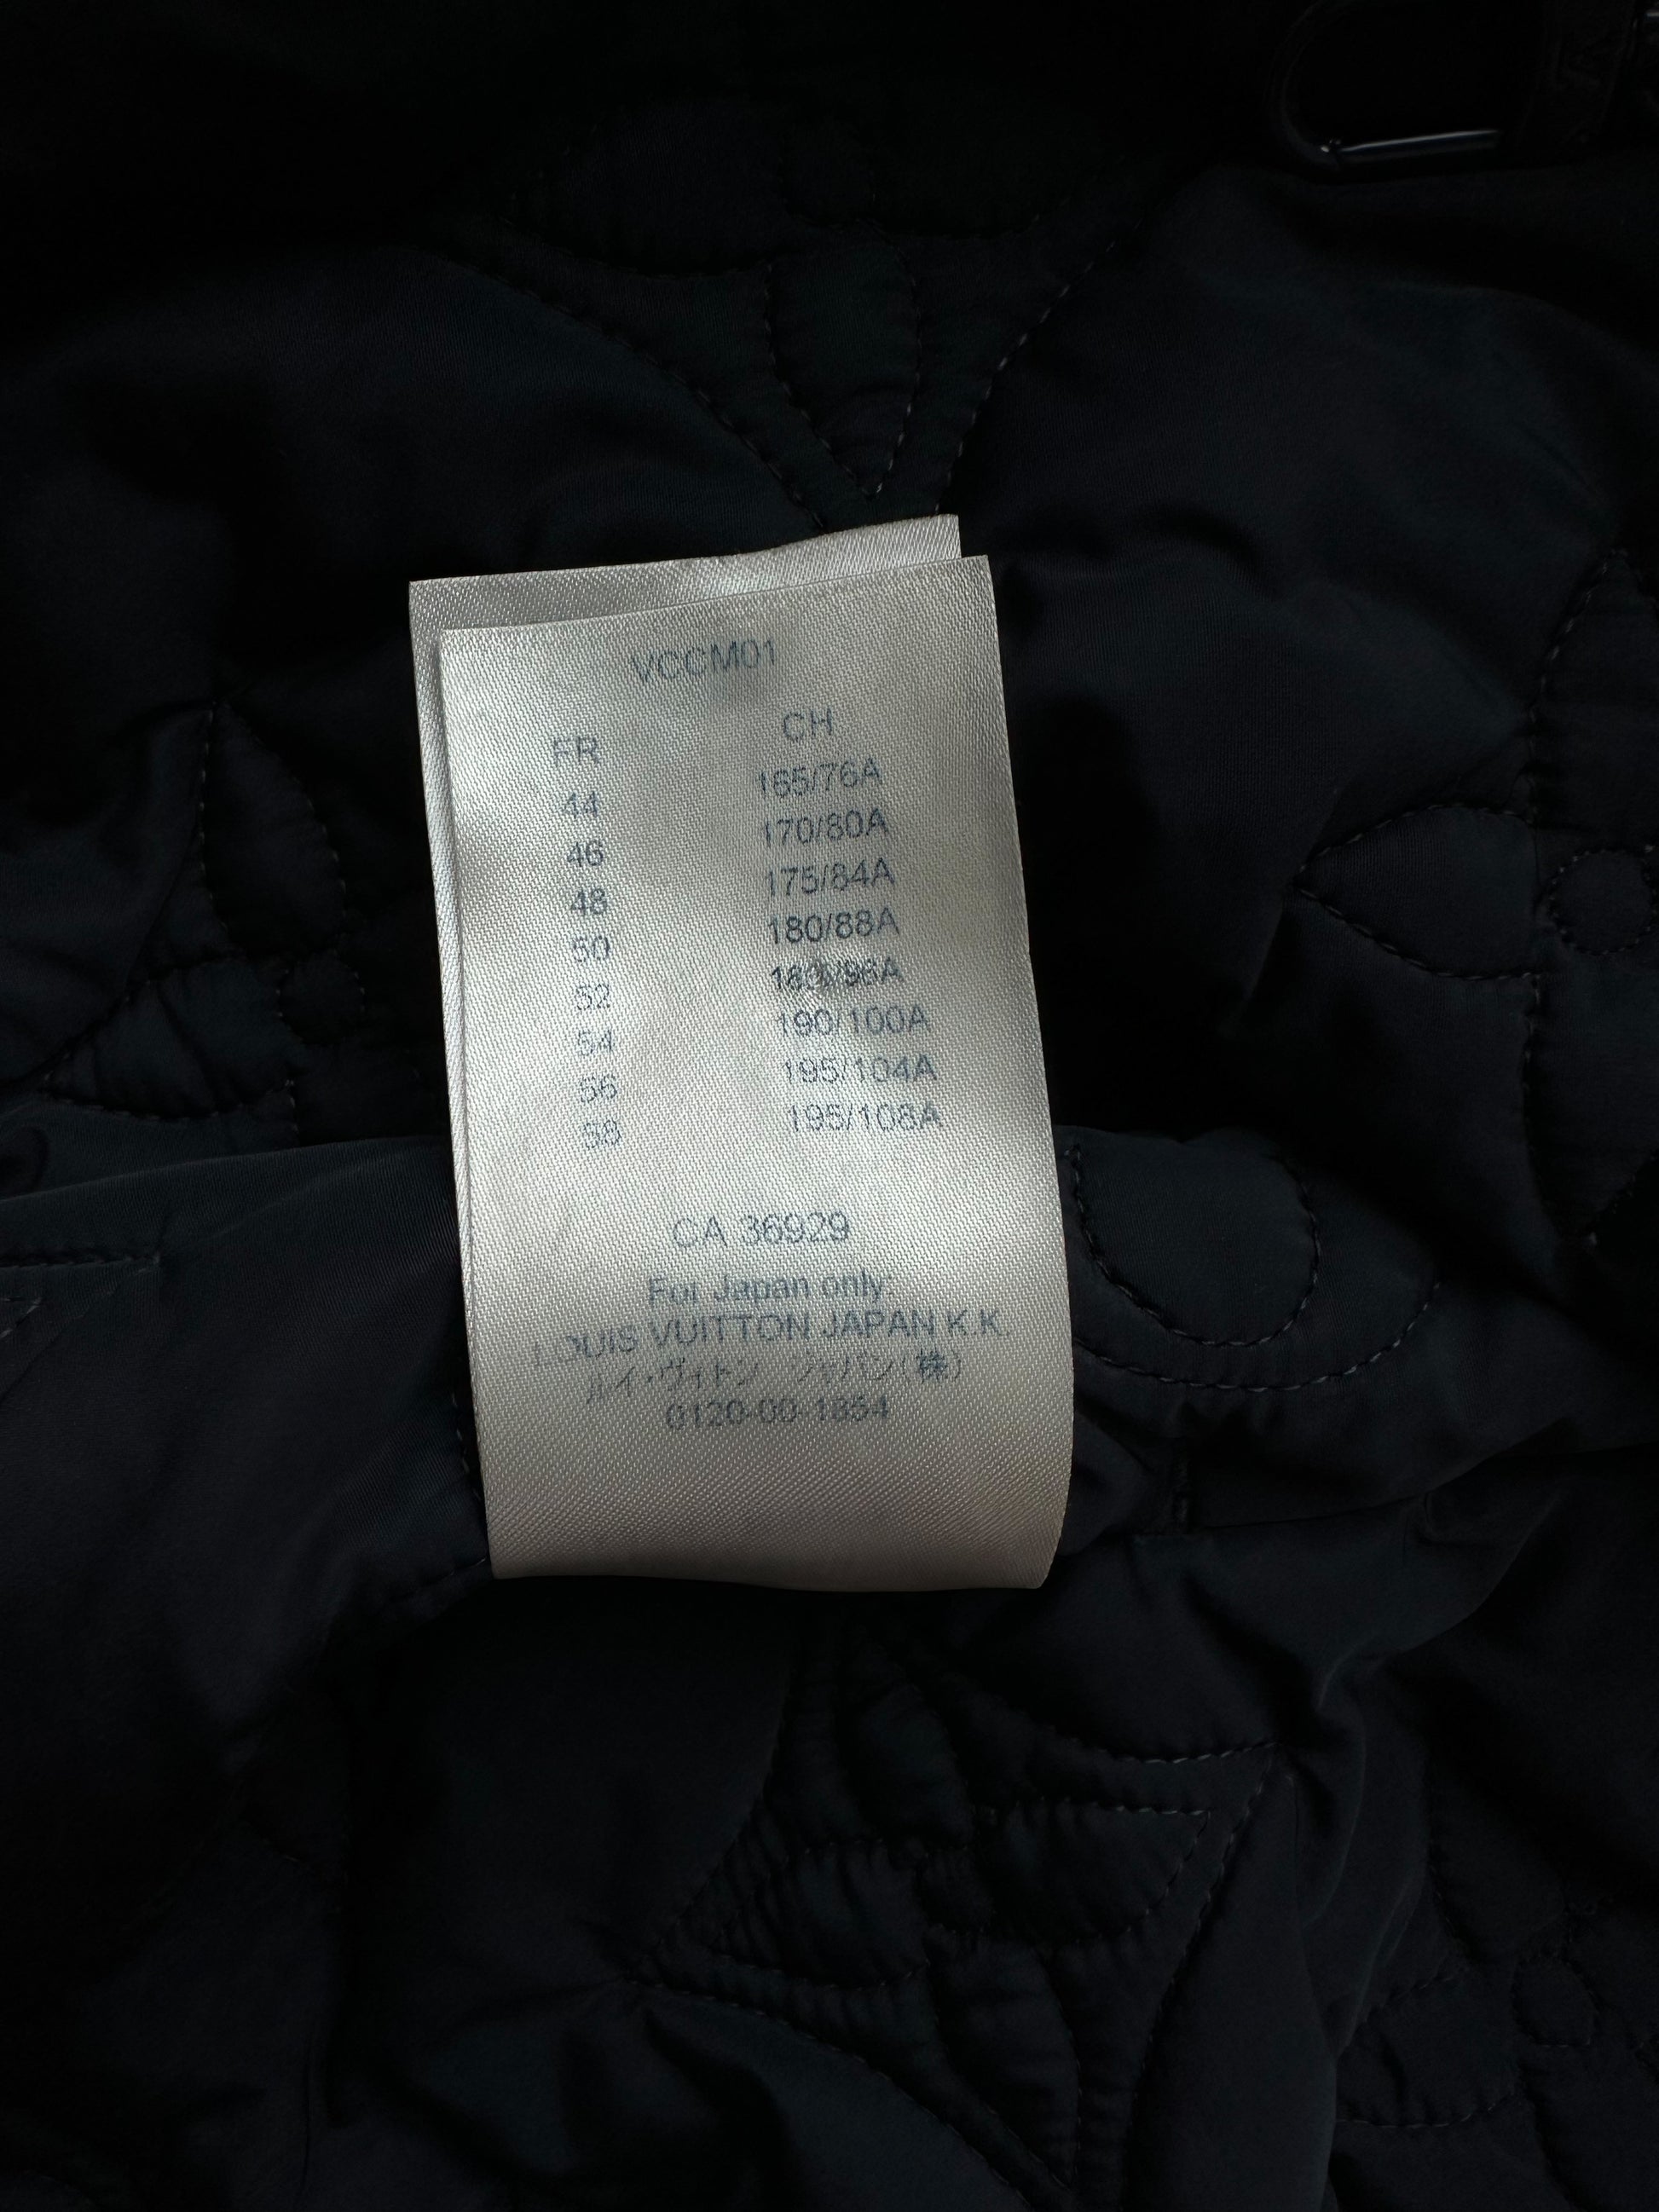 Louis Vuitton Navy Monogram Padded Jacket – Savonches